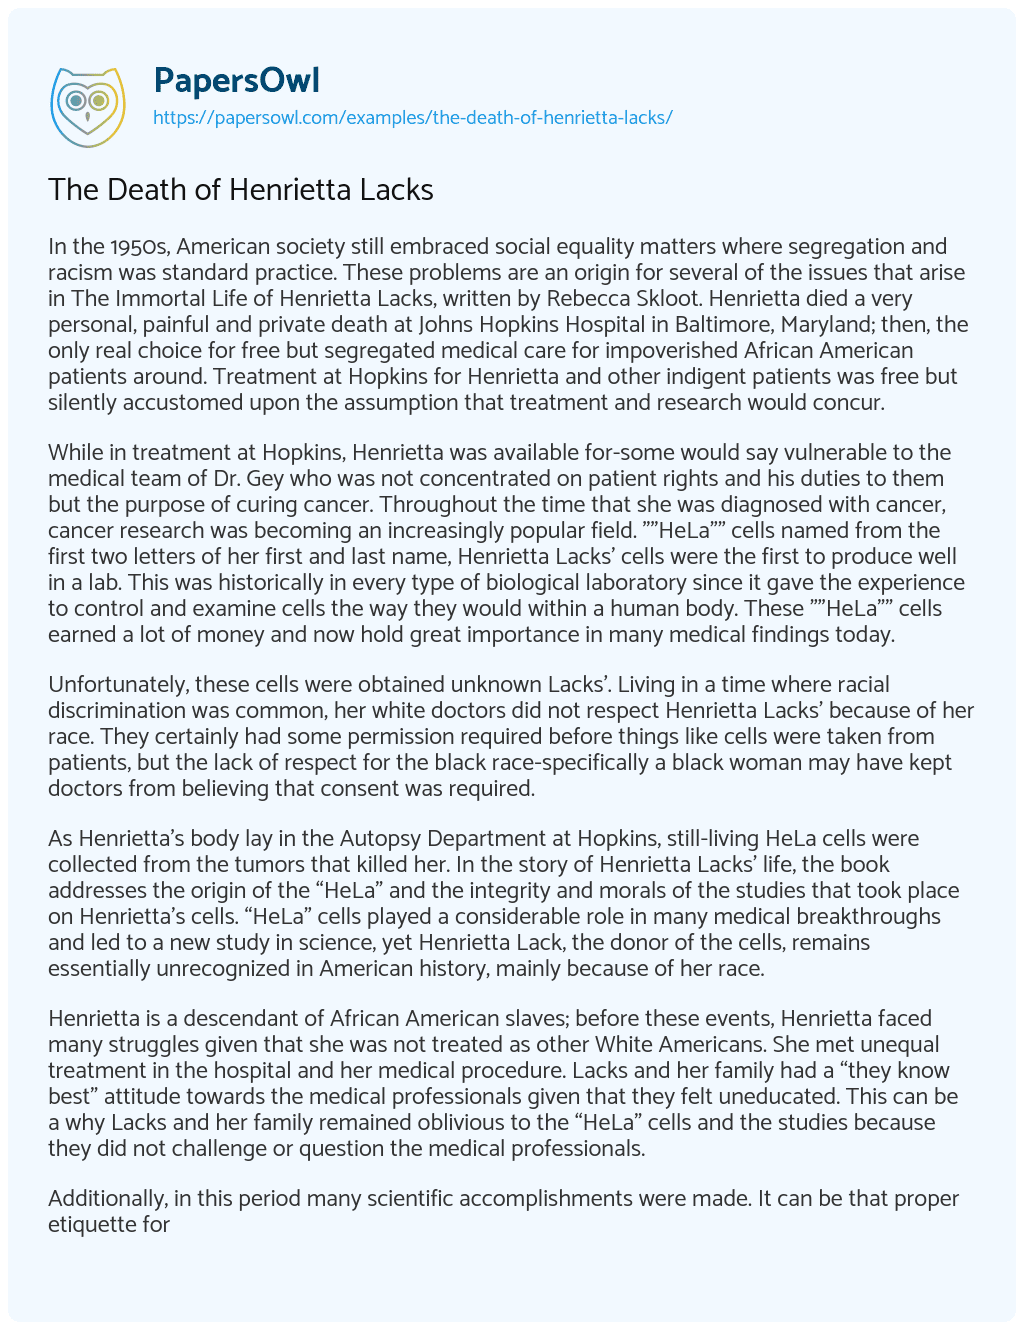 The Death of Henrietta Lacks essay